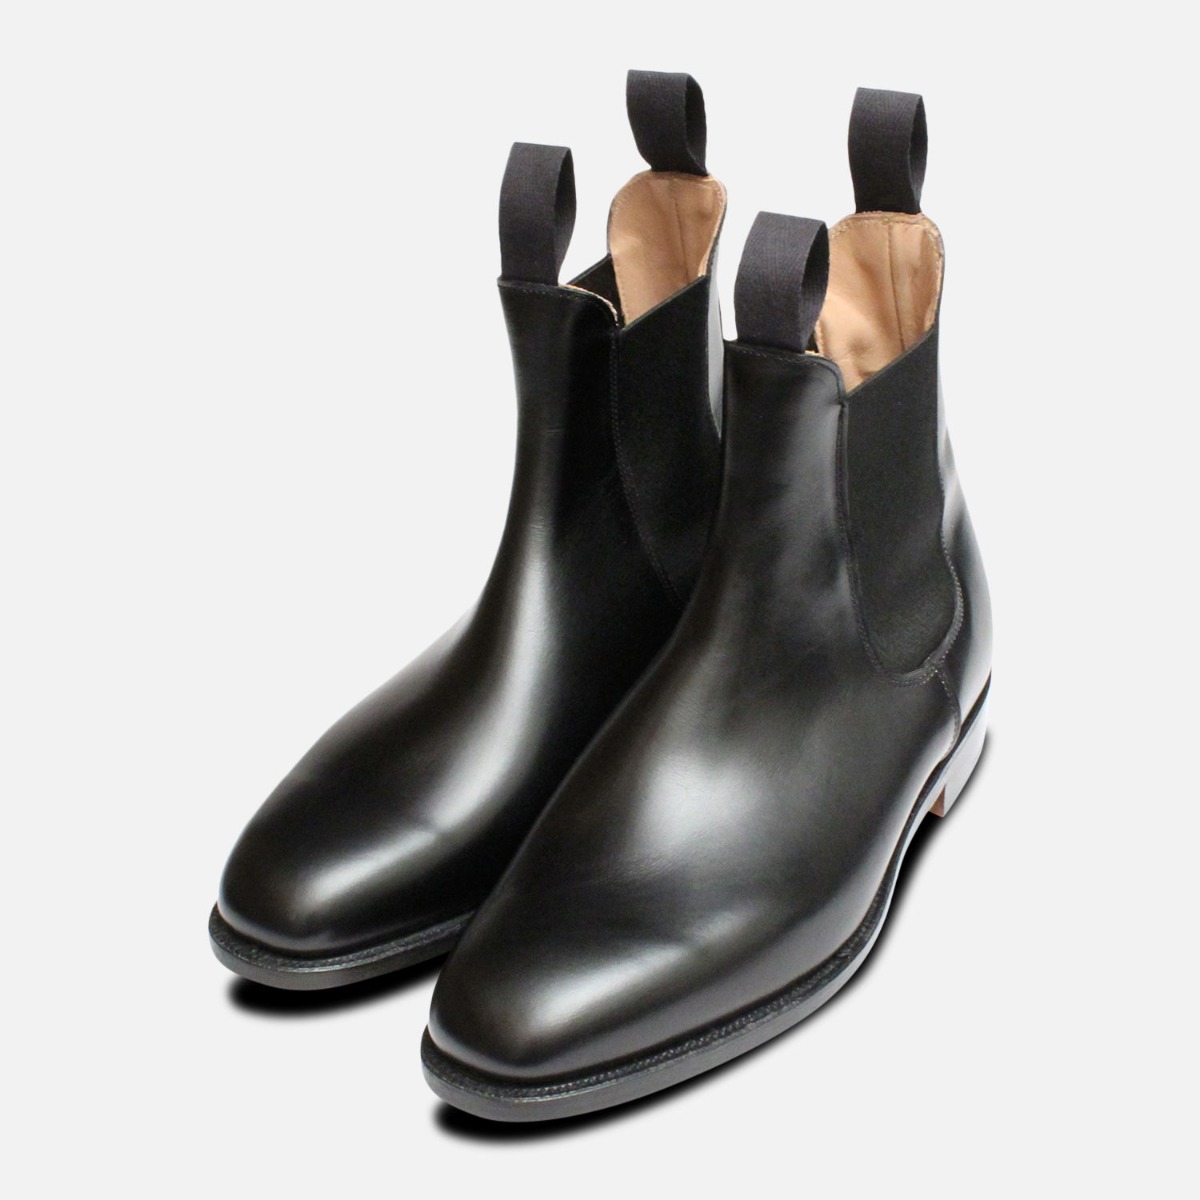 Trickers Black Lambourn Chelsea Boots | eBay